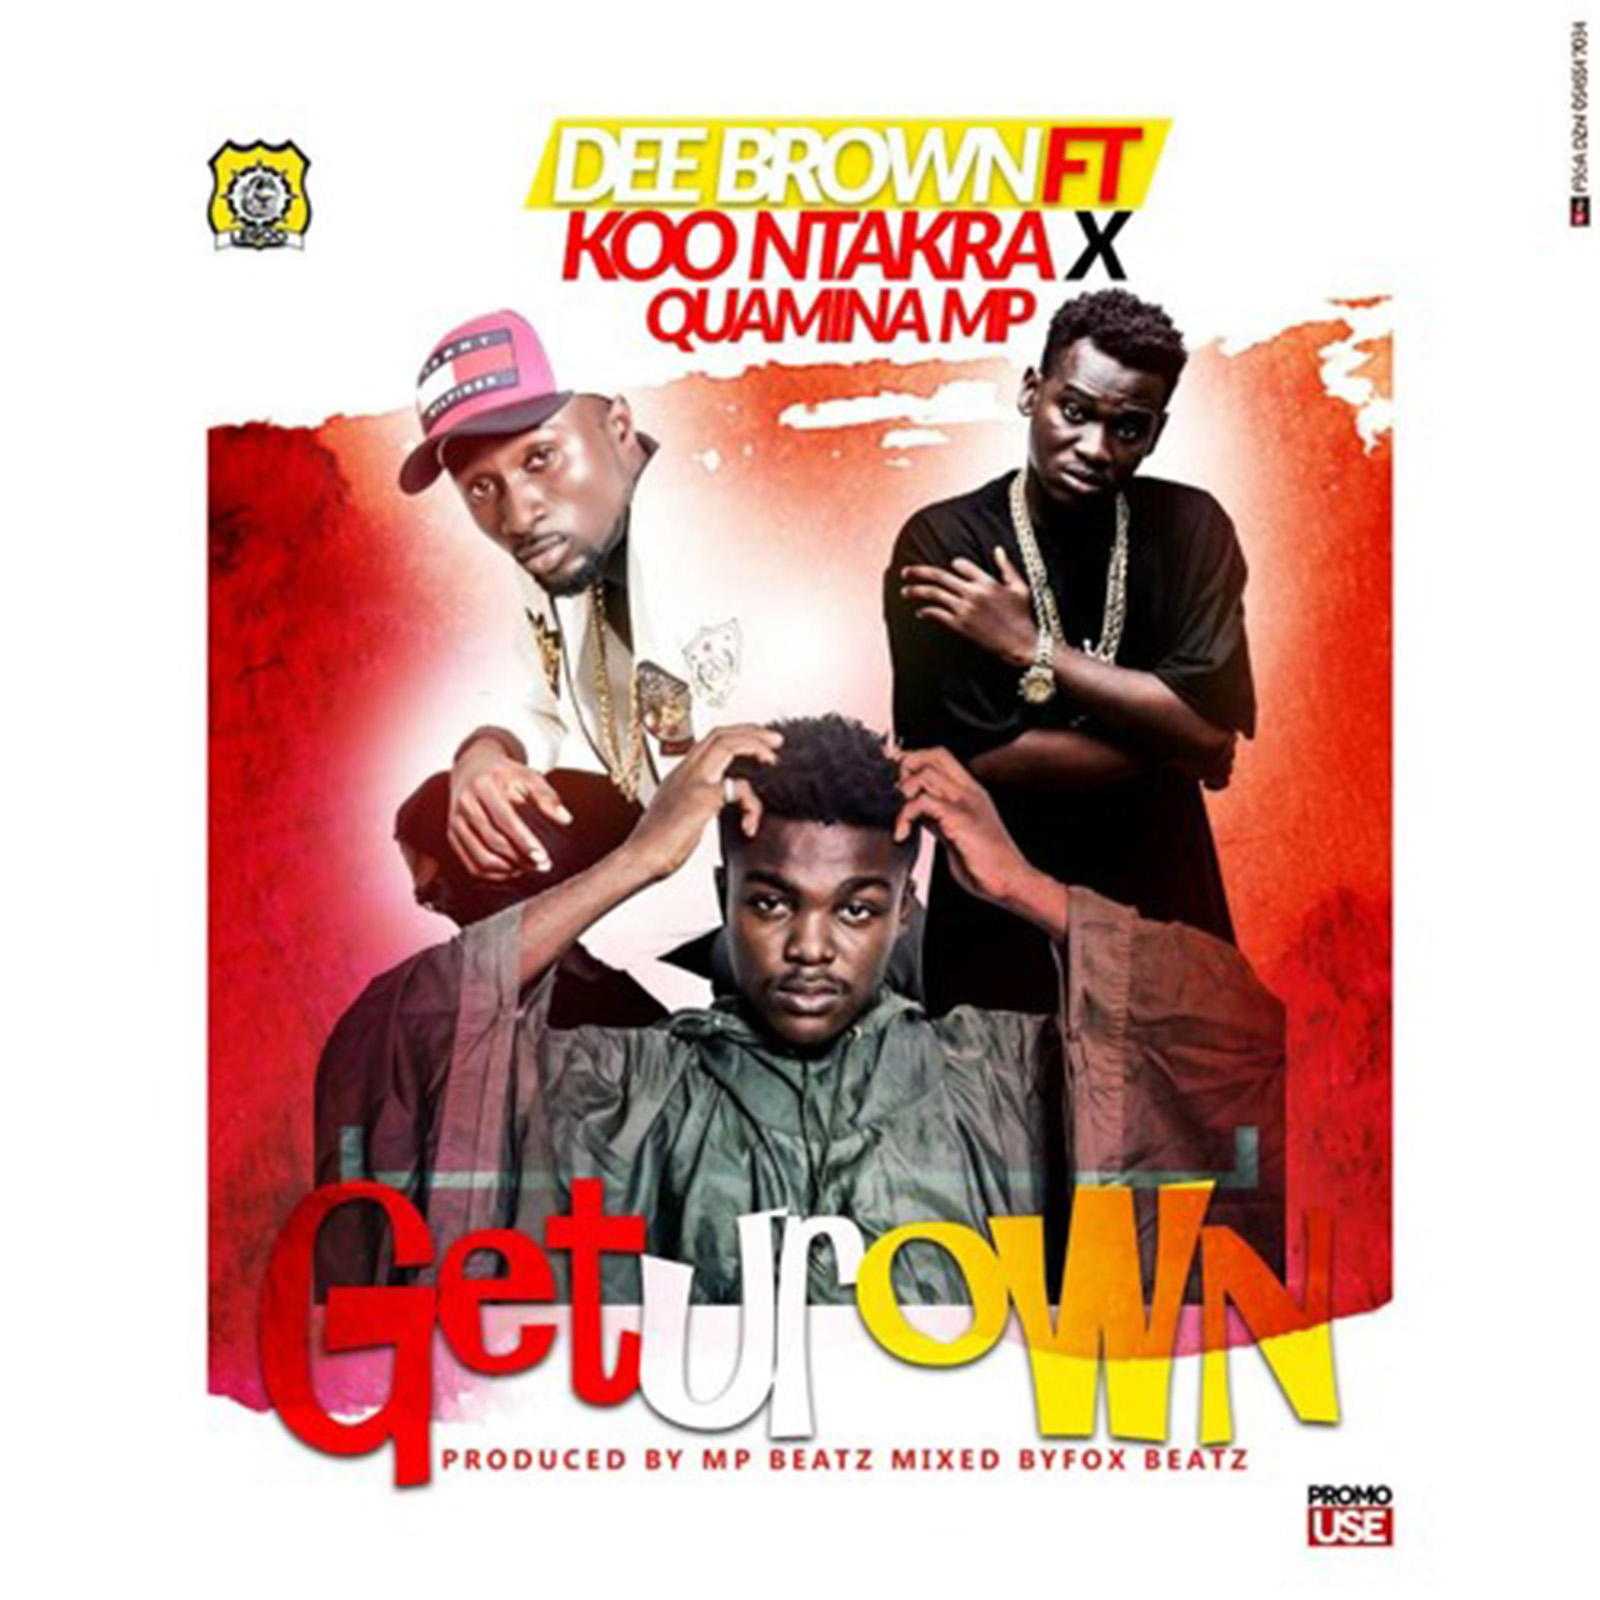 Get Ur Own by Dee Brown feat. Koo Ntakra & Quamina MP